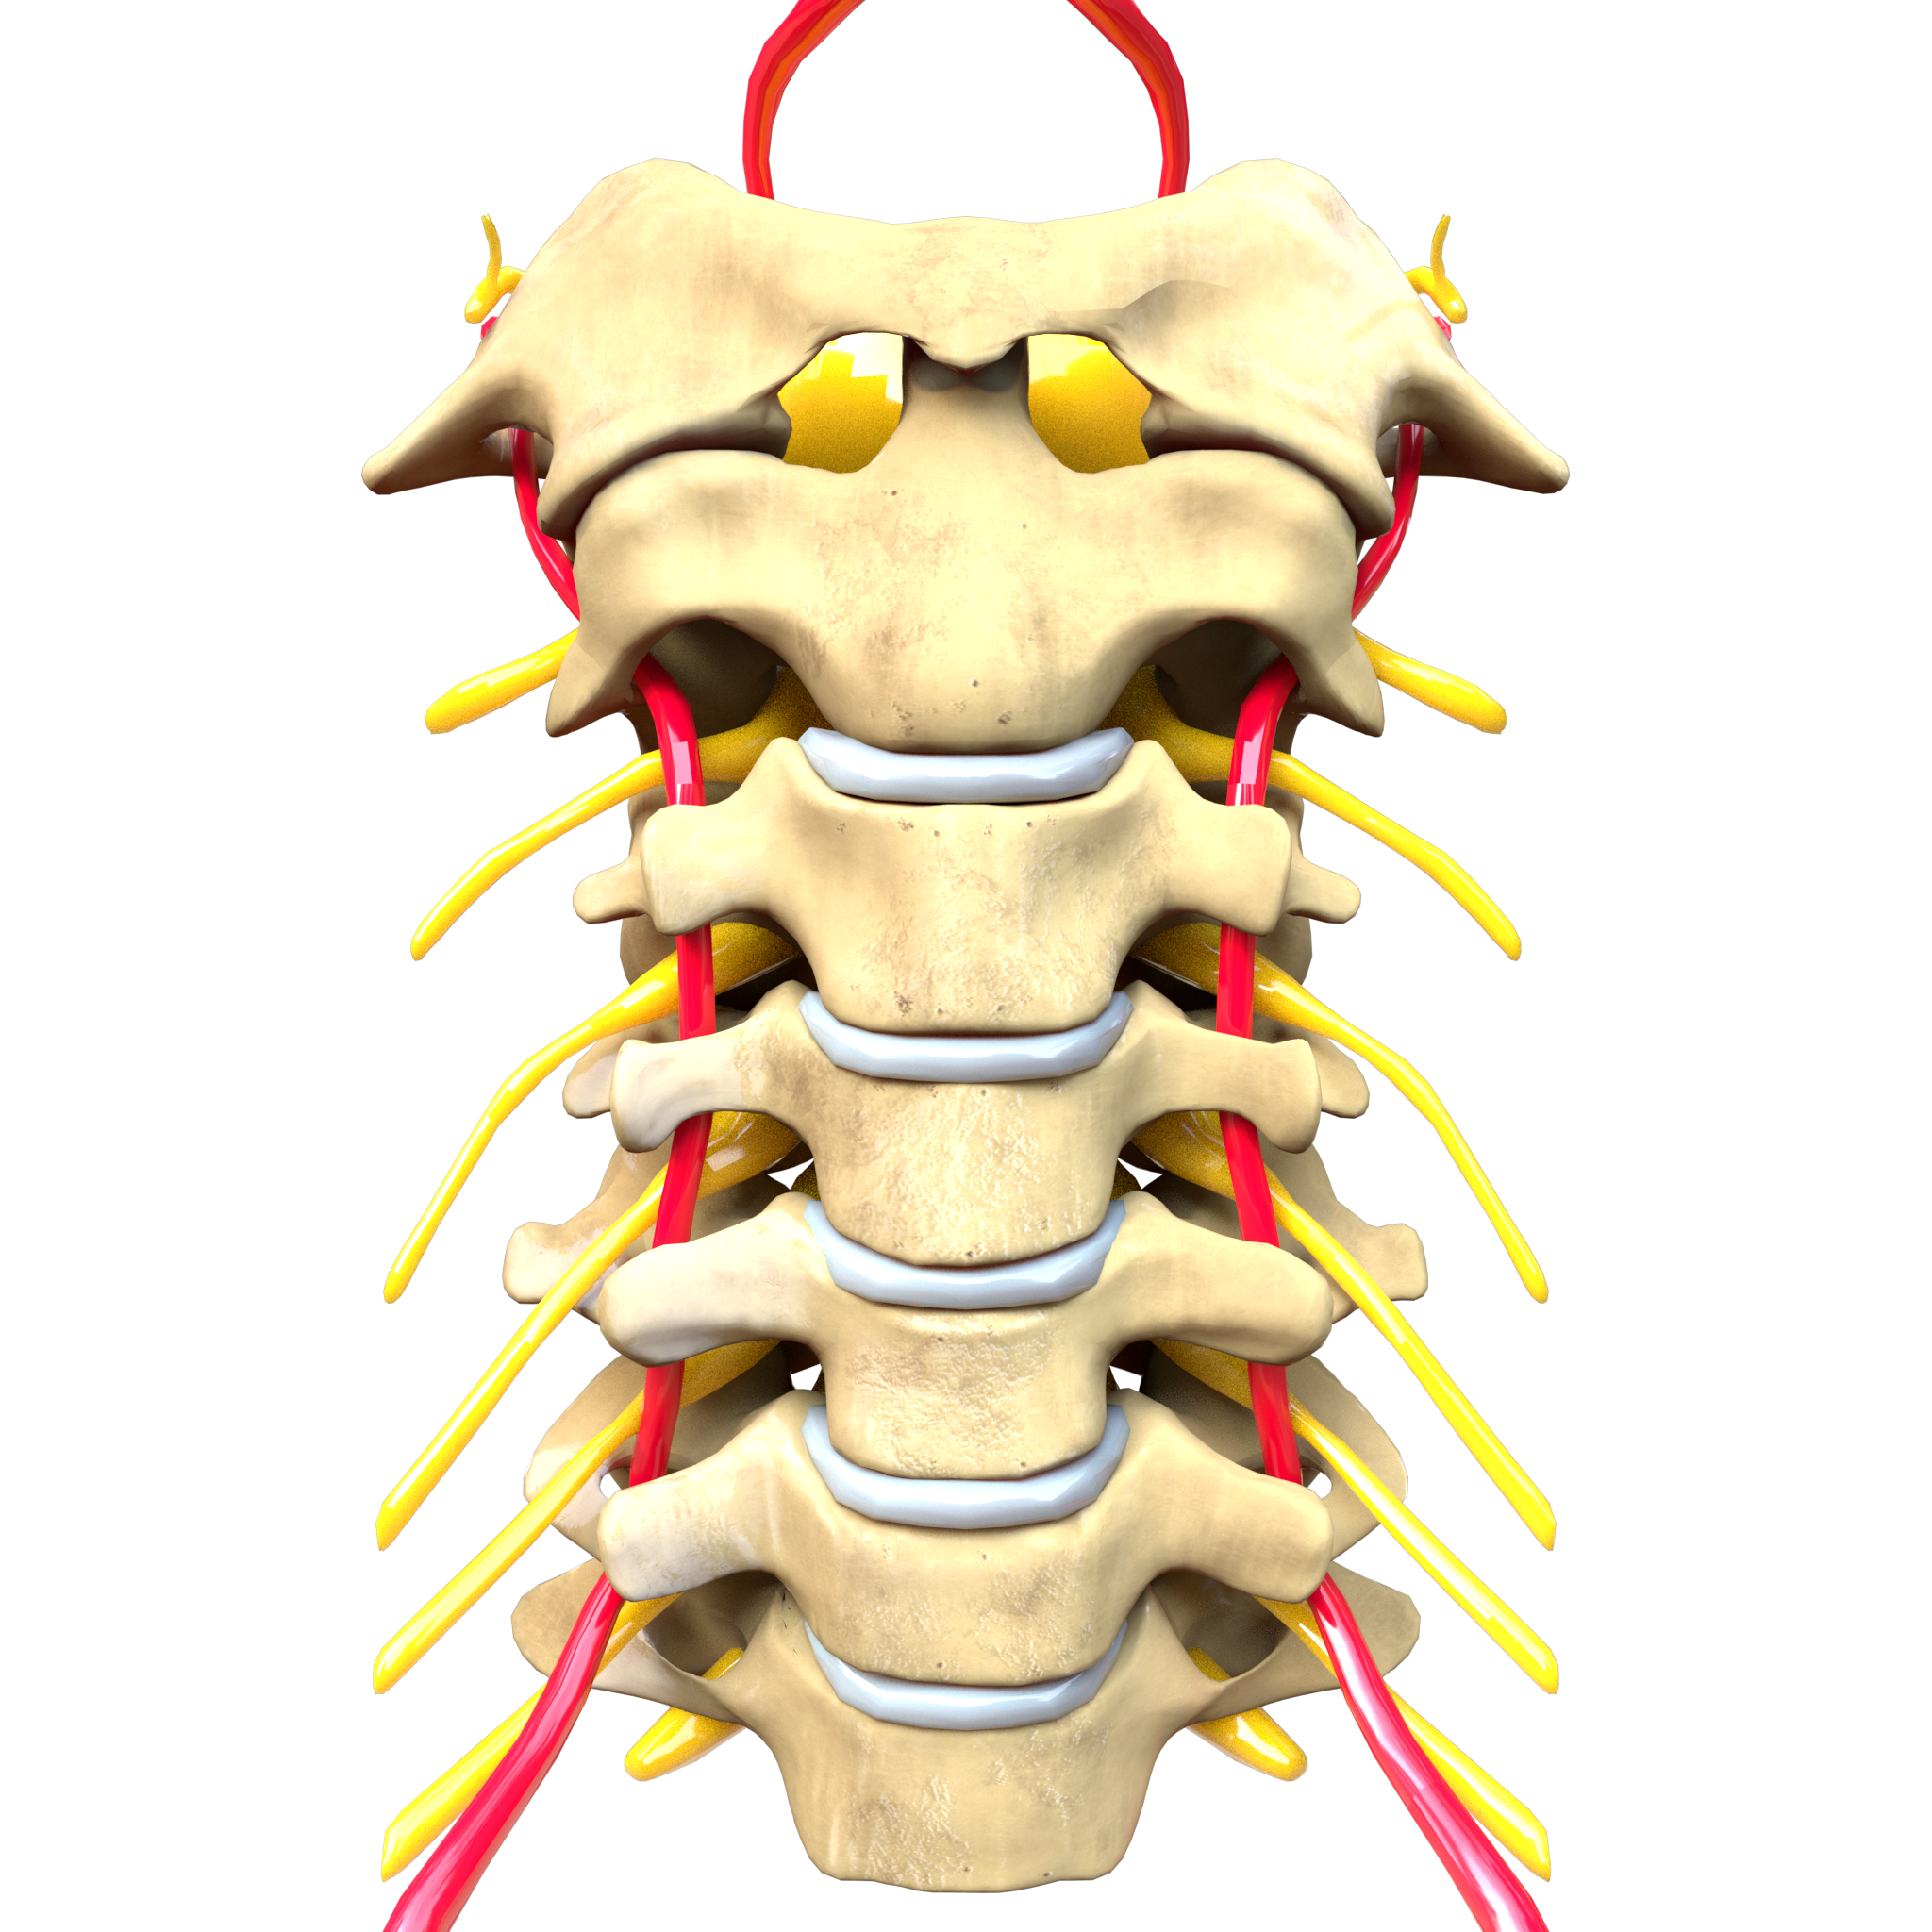 cervikal rygsøjlens anatomi